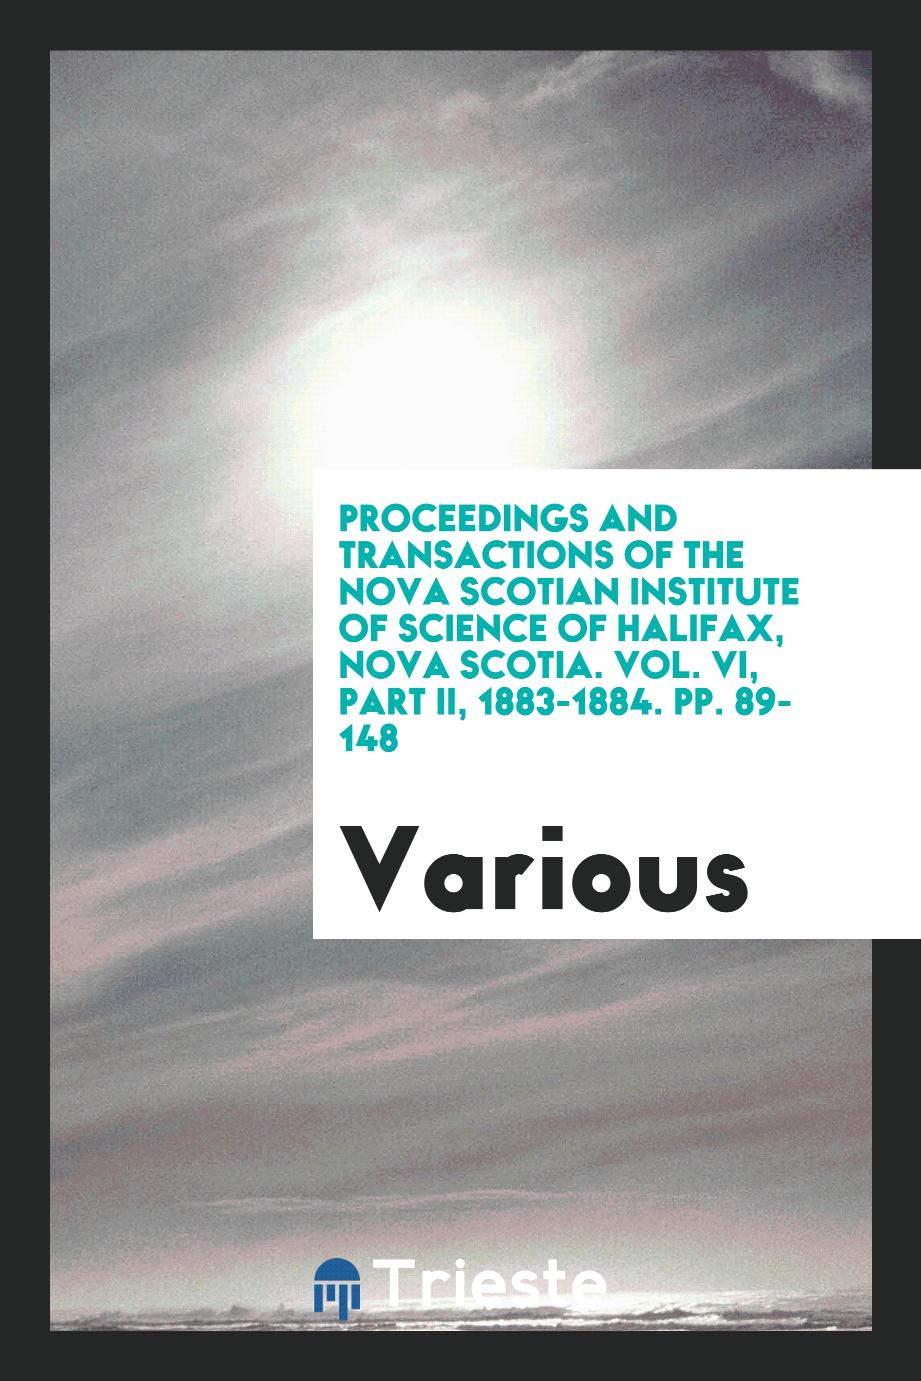 Proceedings and transactions of the Nova Scotian Institute of Science of Halifax, Nova Scotia. Vol. VI, part II, 1883-1884. pp. 89-148